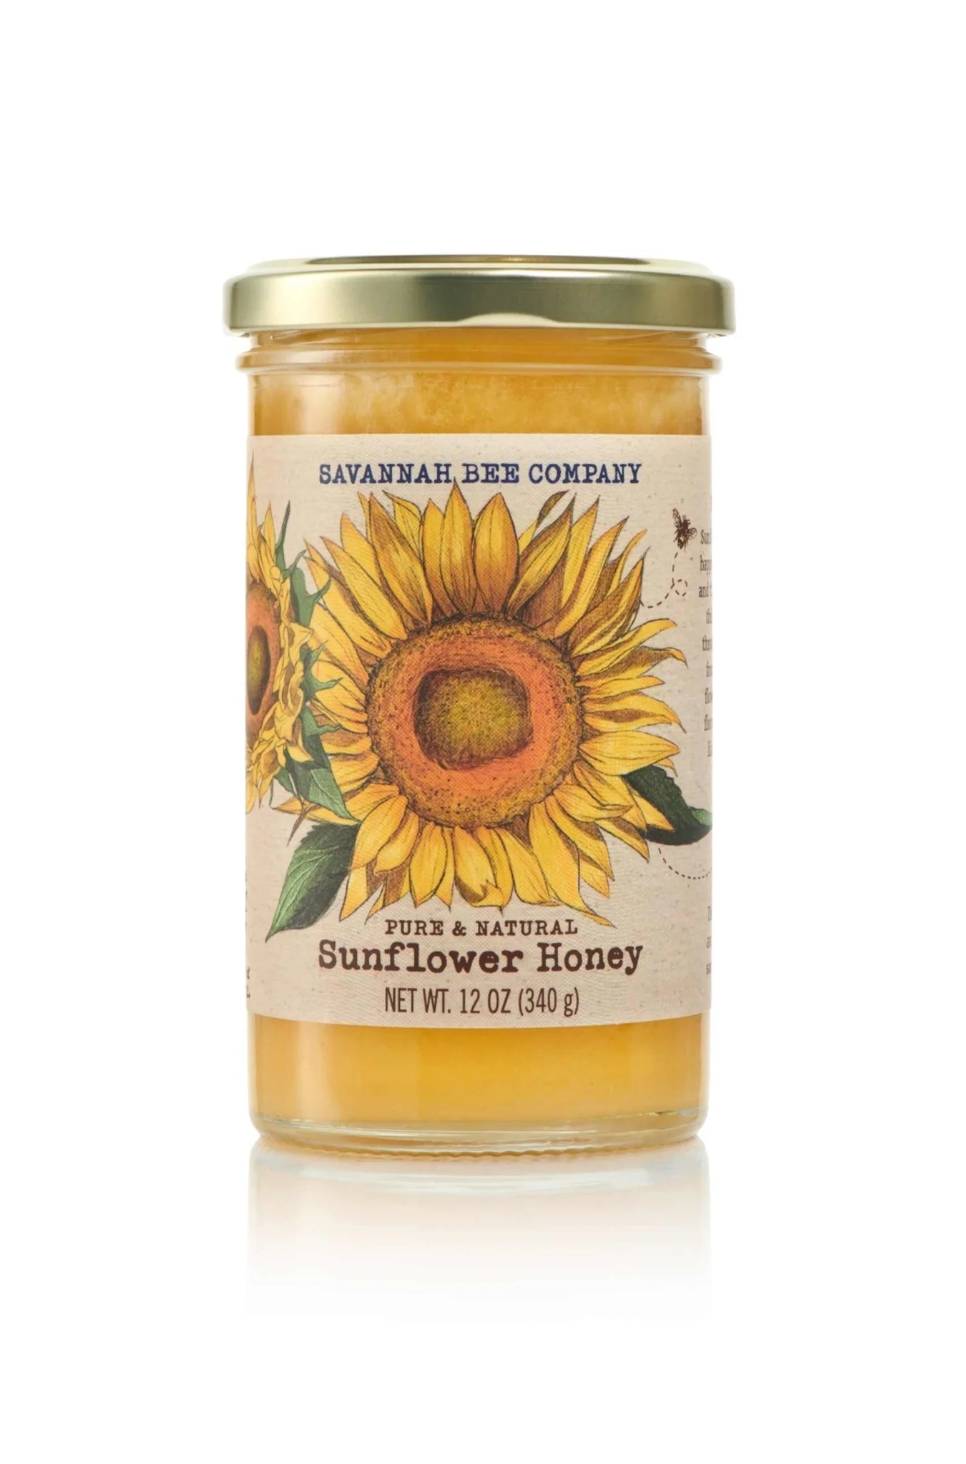 Sunflower Honey by Savannah Bee Company